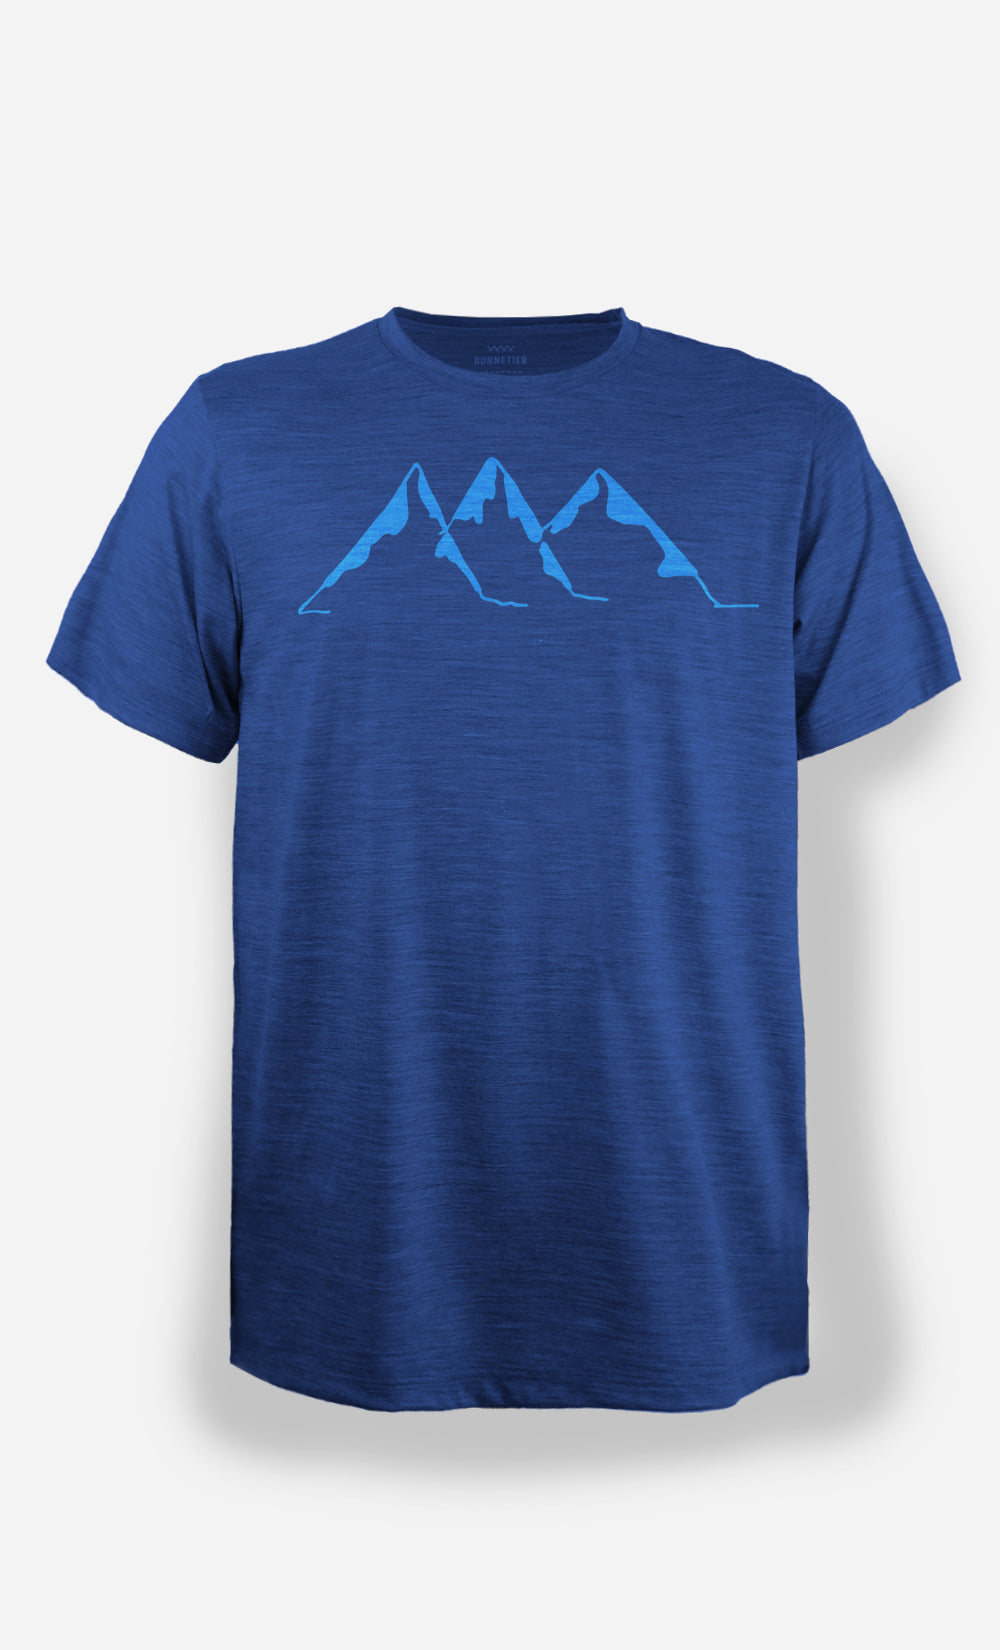 T-Shirt Mérinos Homme Bleu Chiné Ultra Léger - Glacier